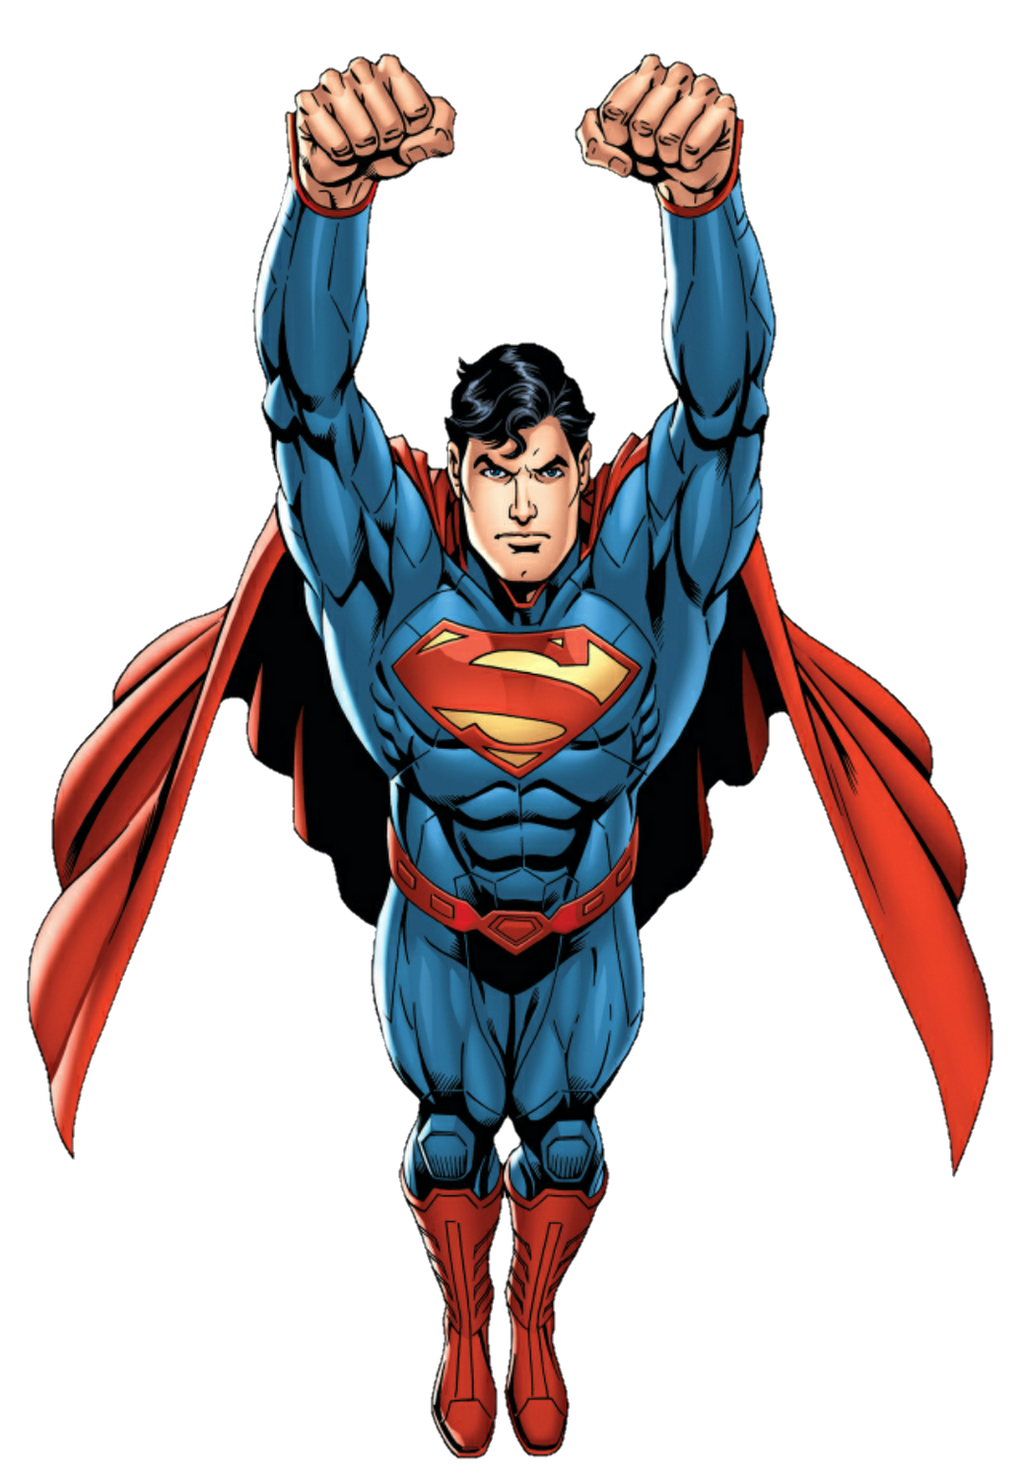 New 52 superman by MayanTimeGod on DeviantArt